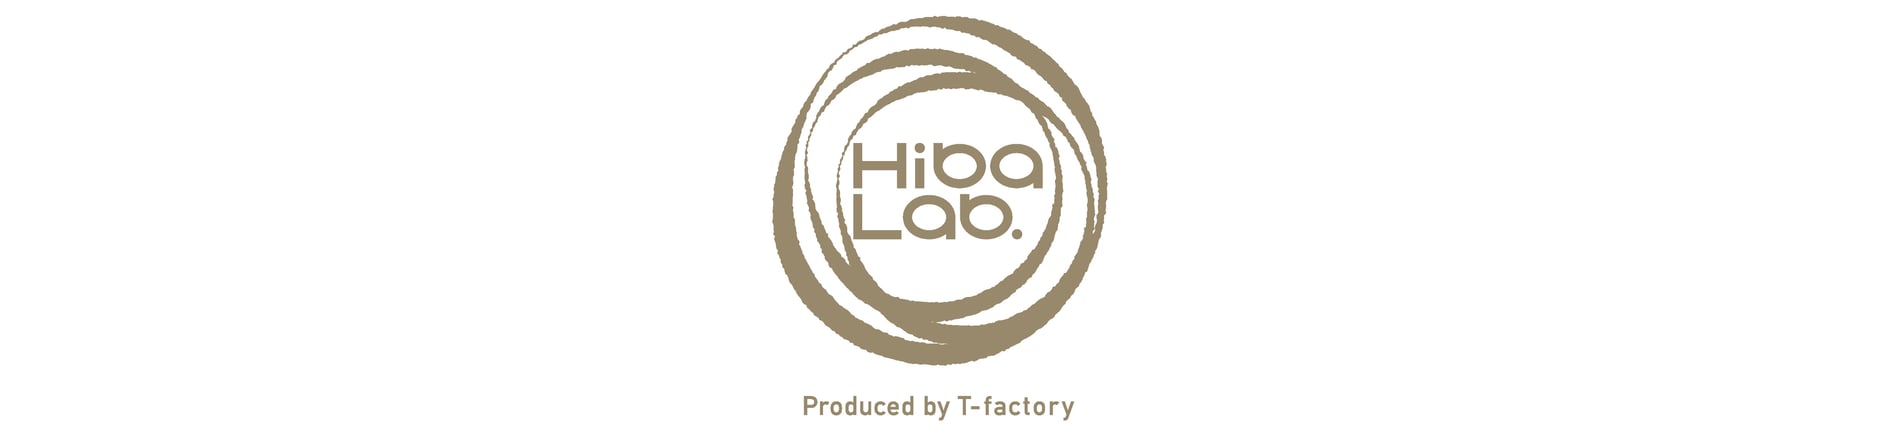 T-factory Hiba Lab.